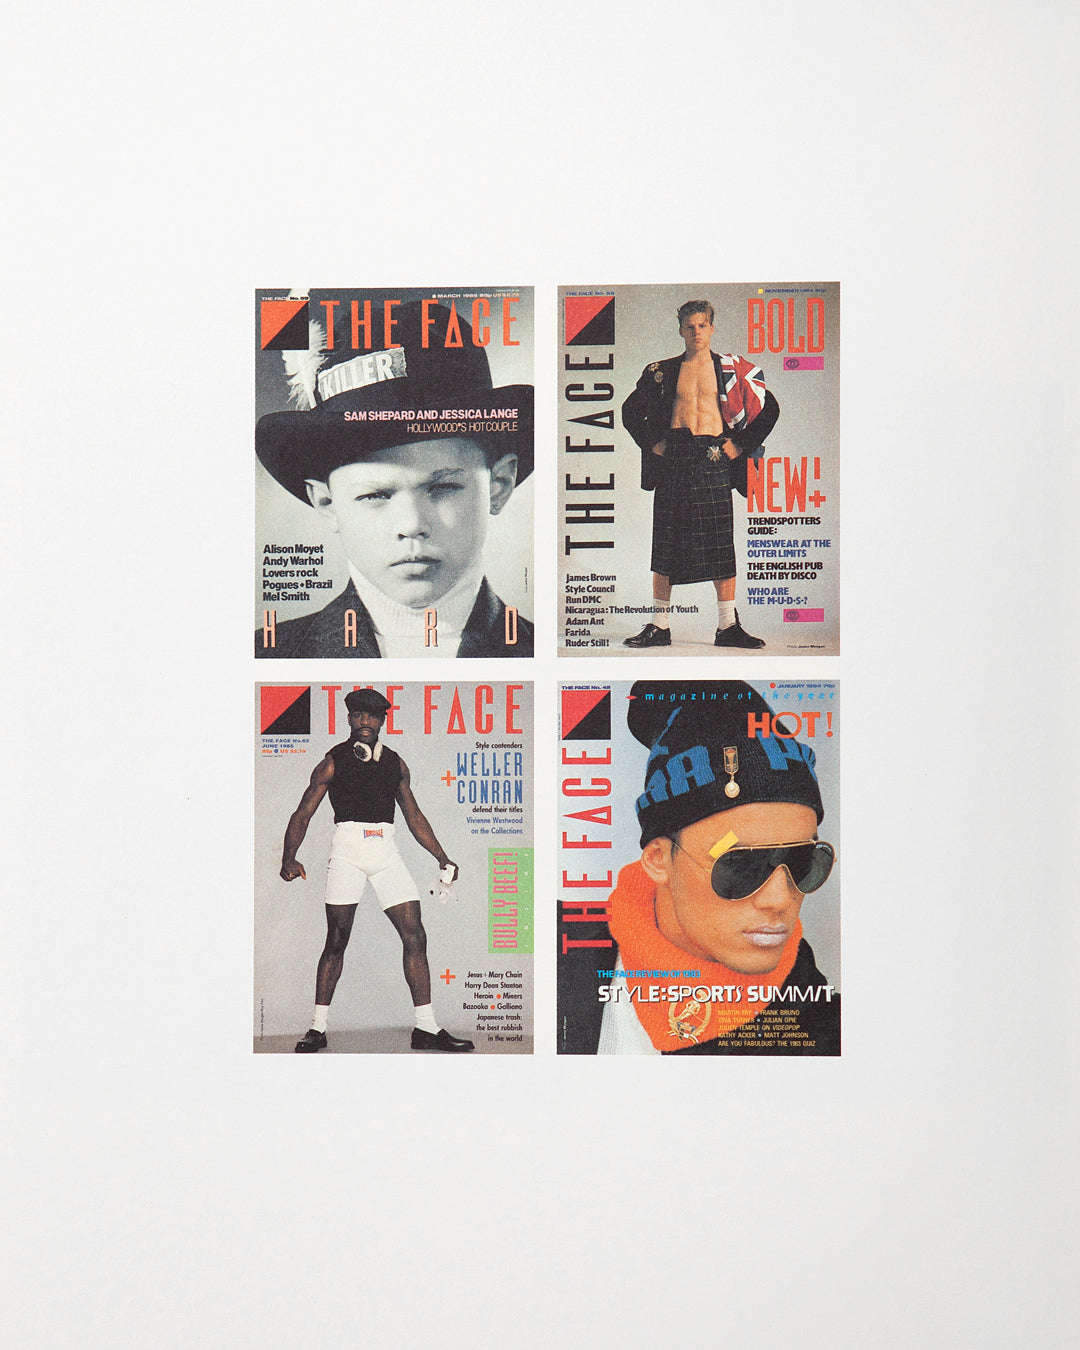 Buffalo: The Style and Fashion of Ray Petri by Jamie Morgan & Mitzi Lorenz